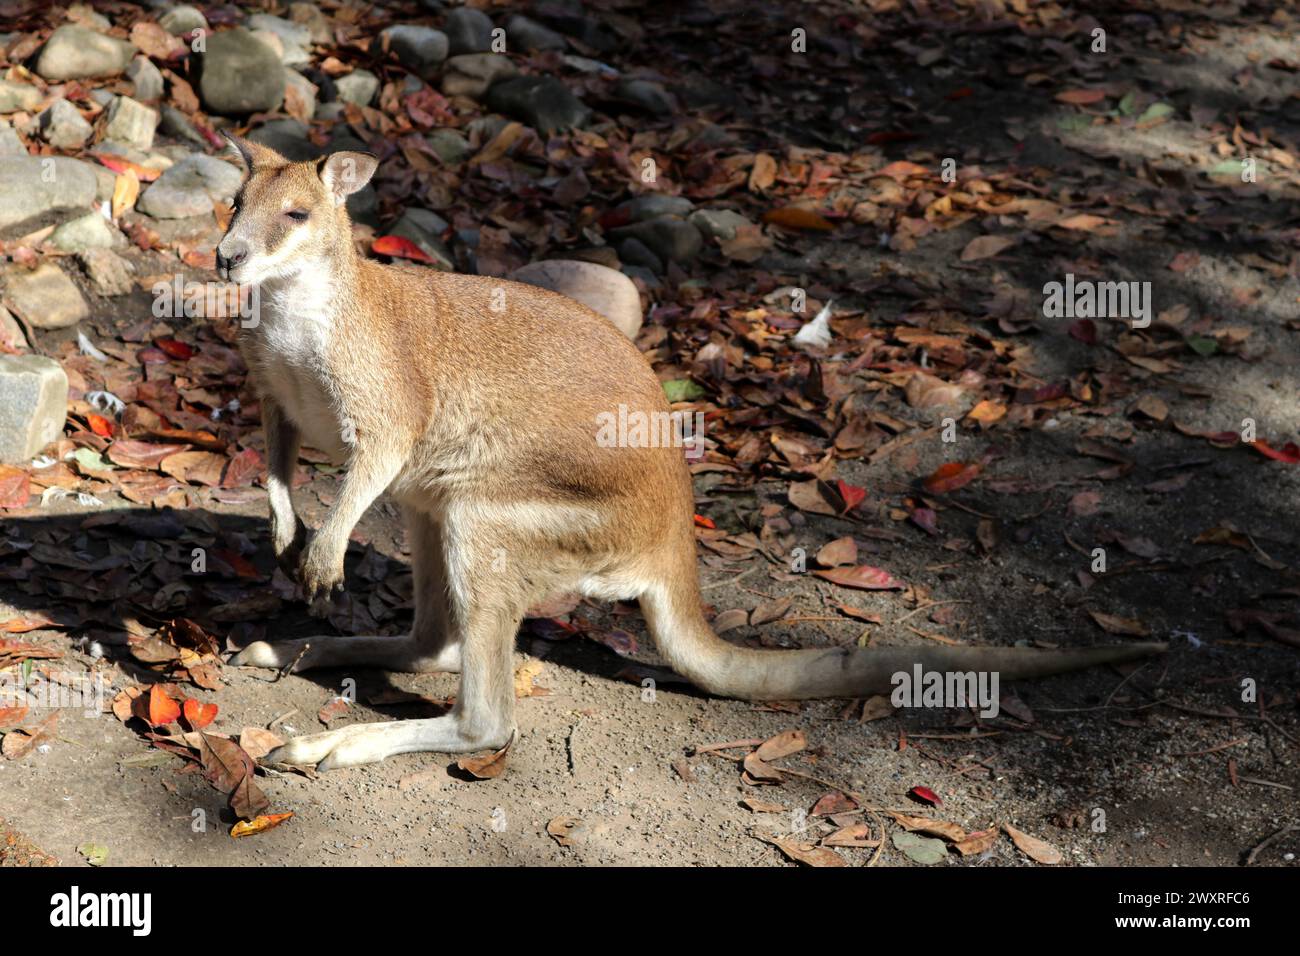 Solitary Agile Wallaby (Notamacropus agilis) searching for food : (pix Sanjiv Shukla) Stock Photo